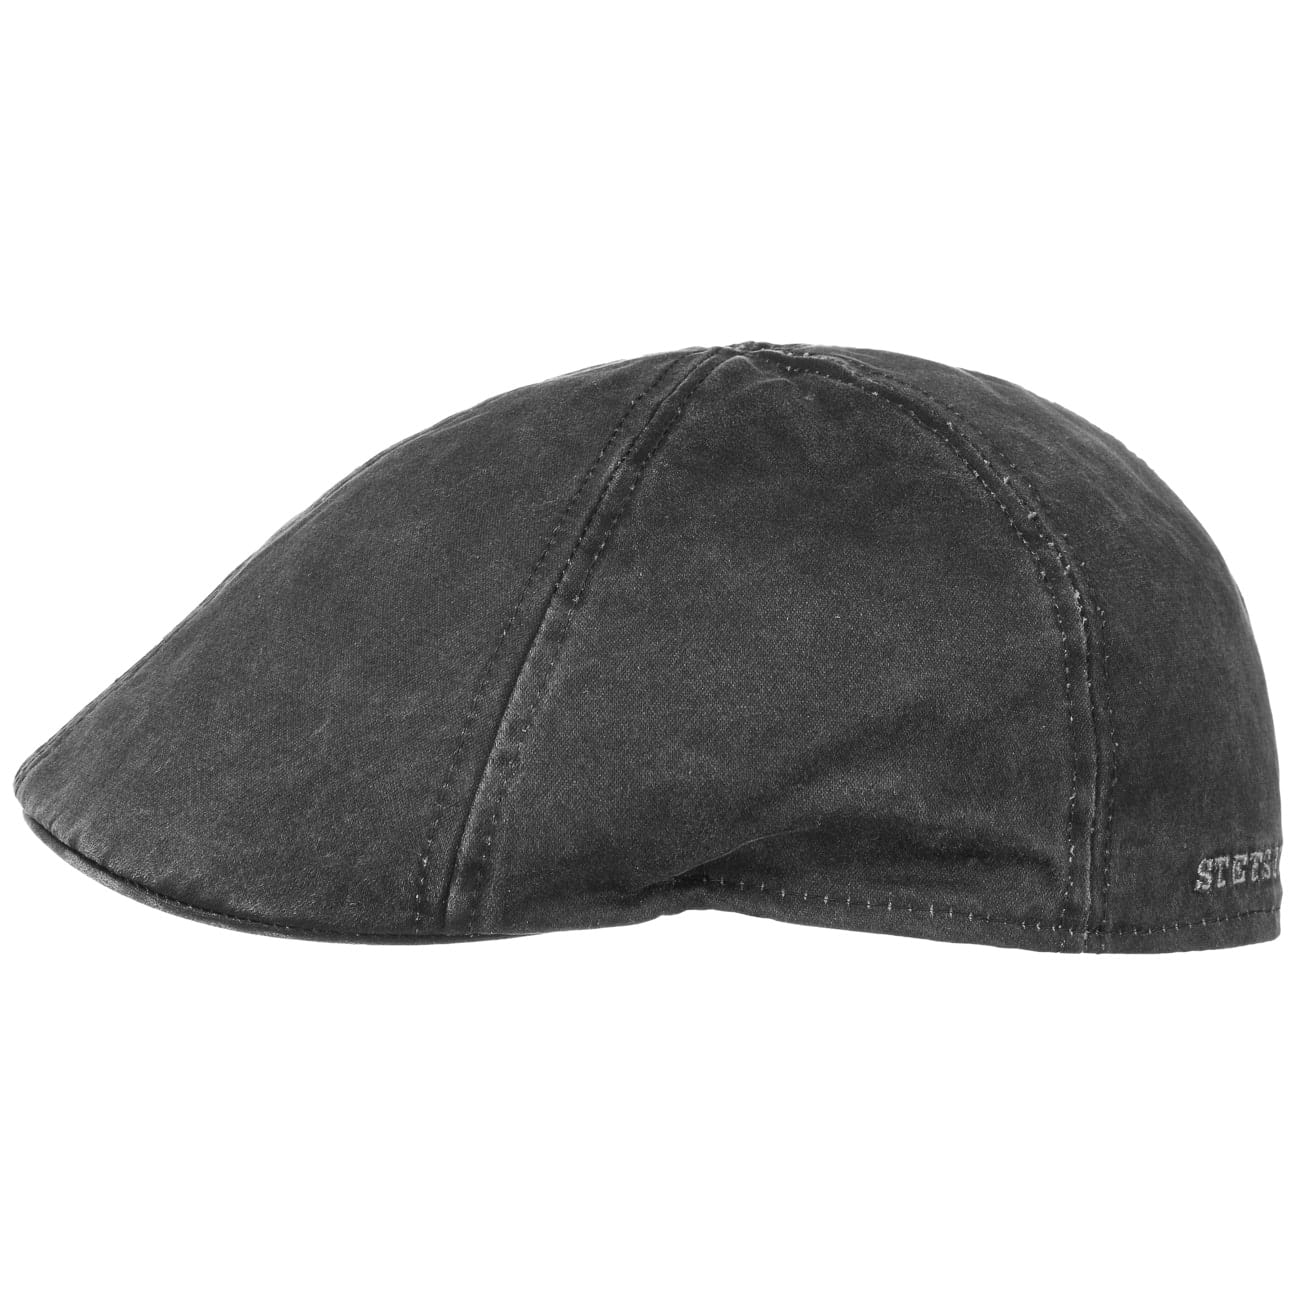 Stetson 6691101-1 Level Gatsby flat cap black